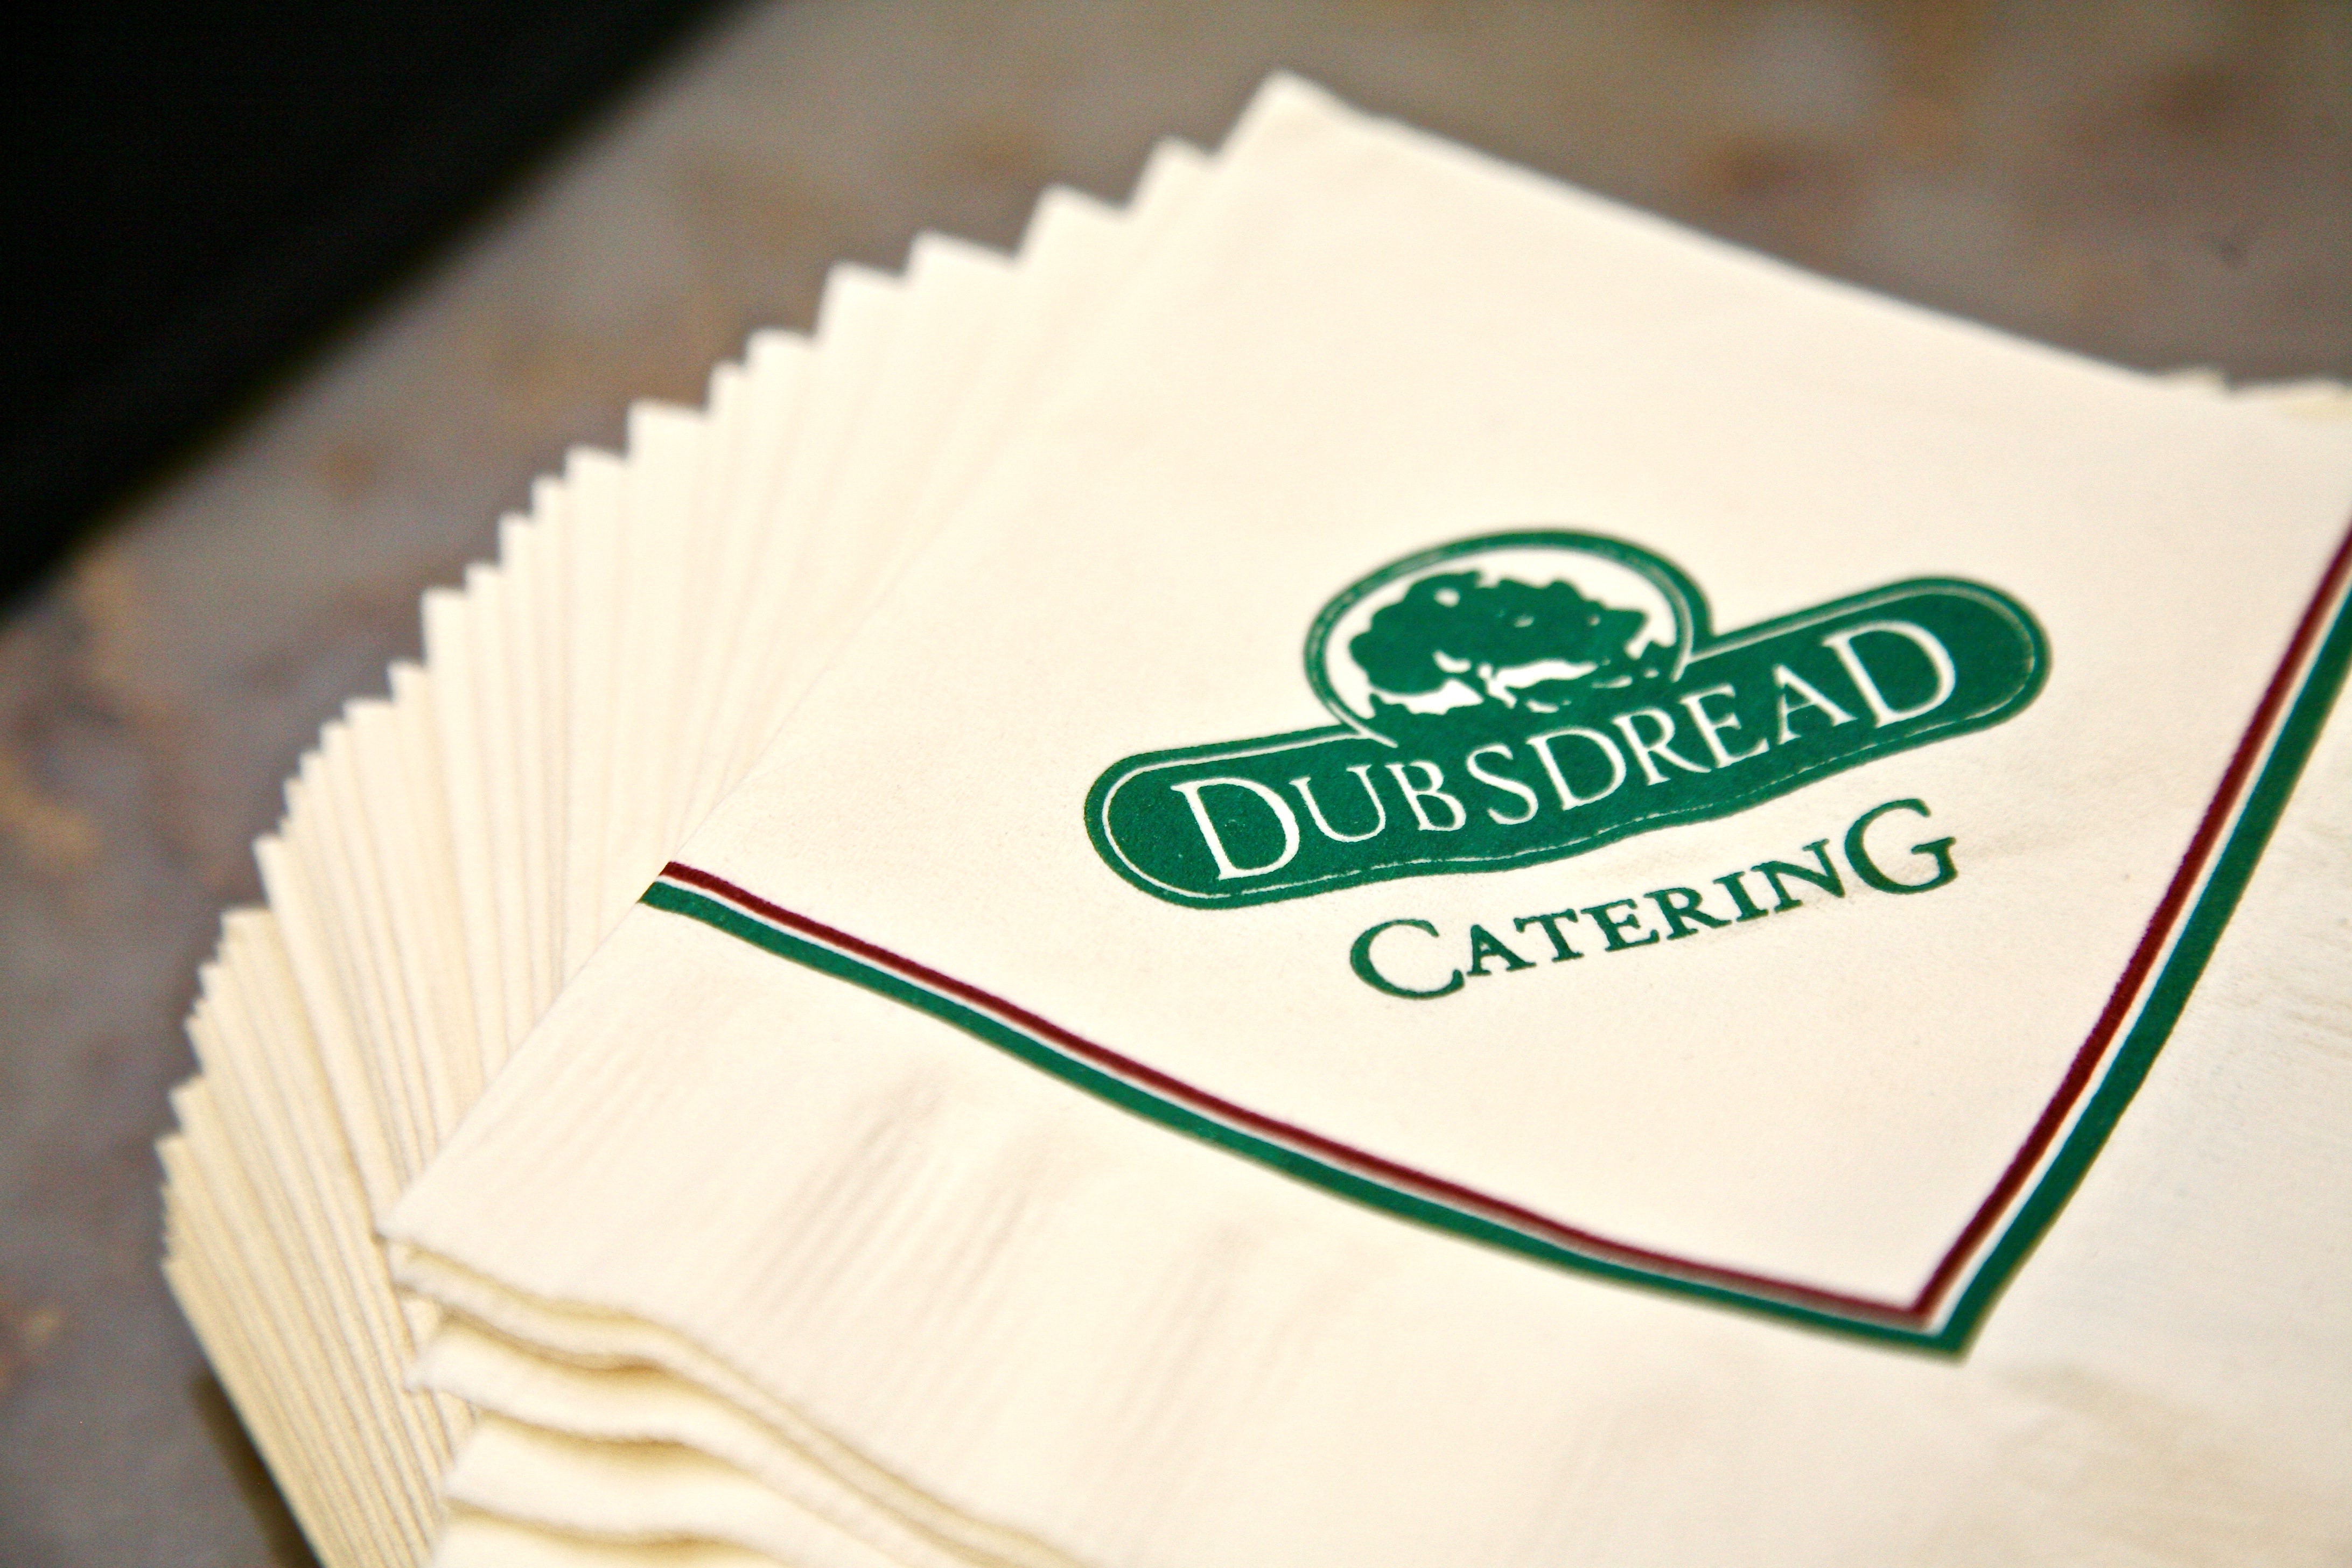 dubsdread catering napkins